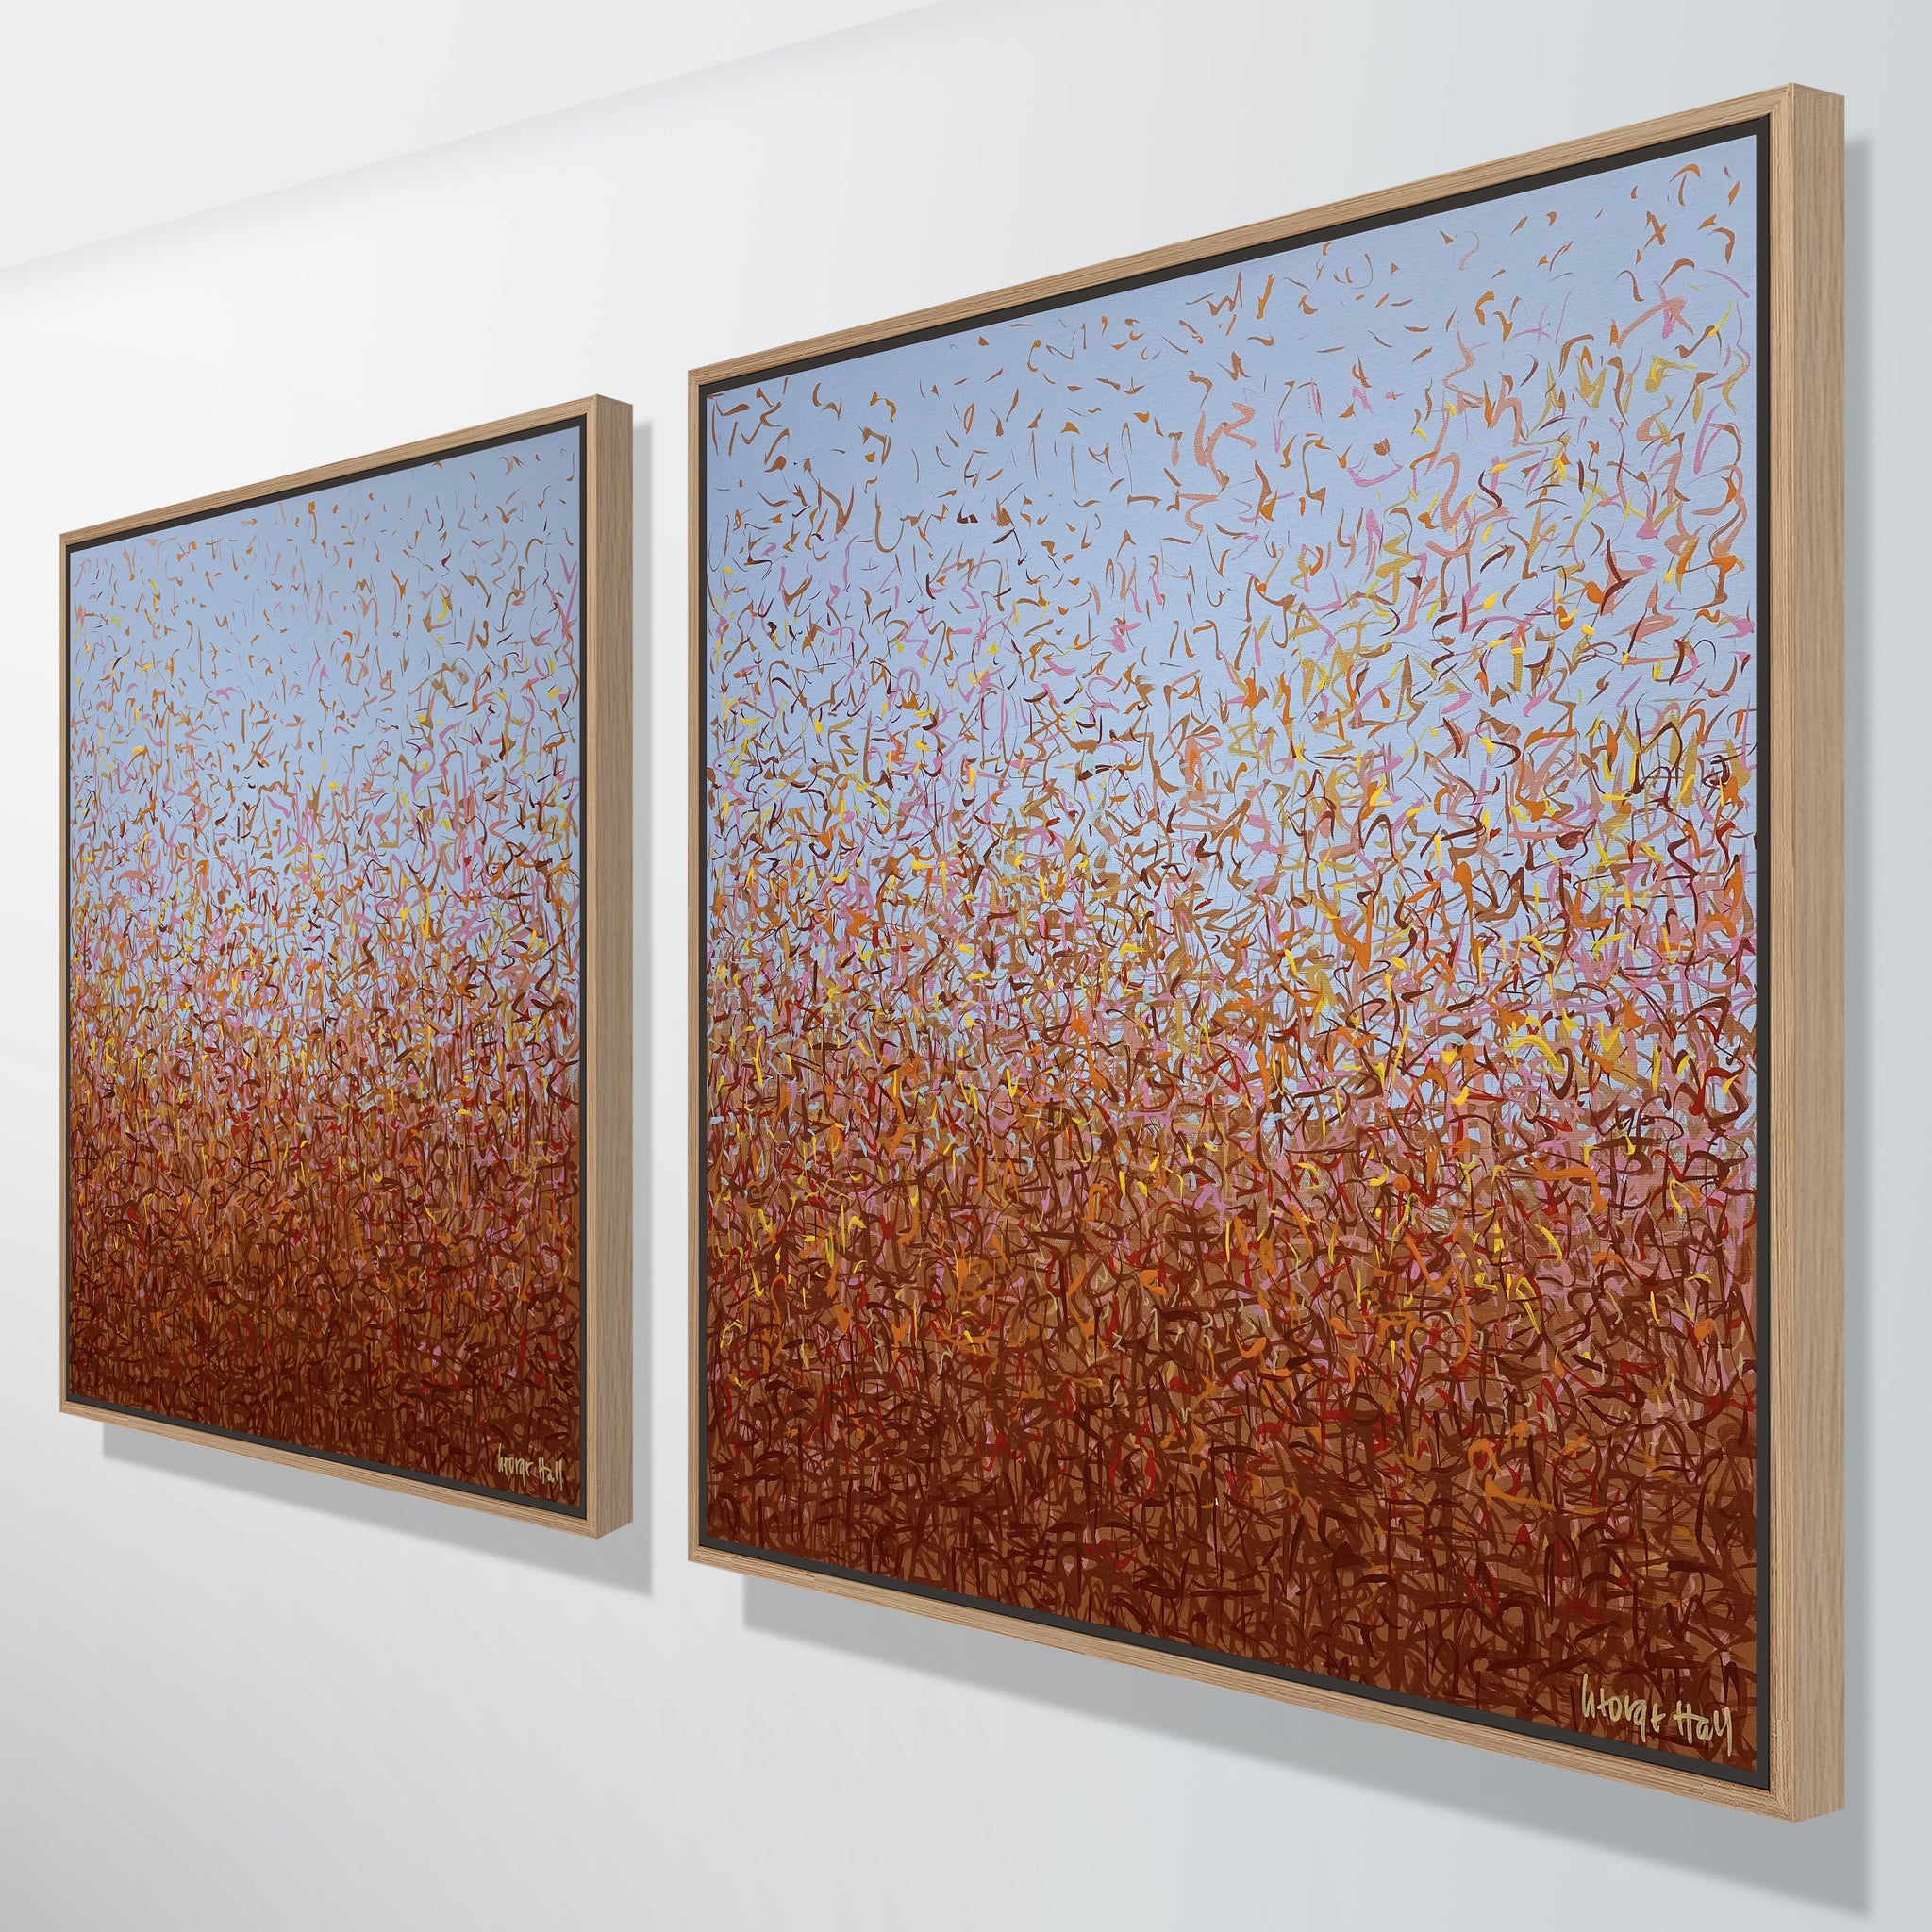 Oondiri Plains Duo Framed - 69cm square each - acrylic painting on canvas